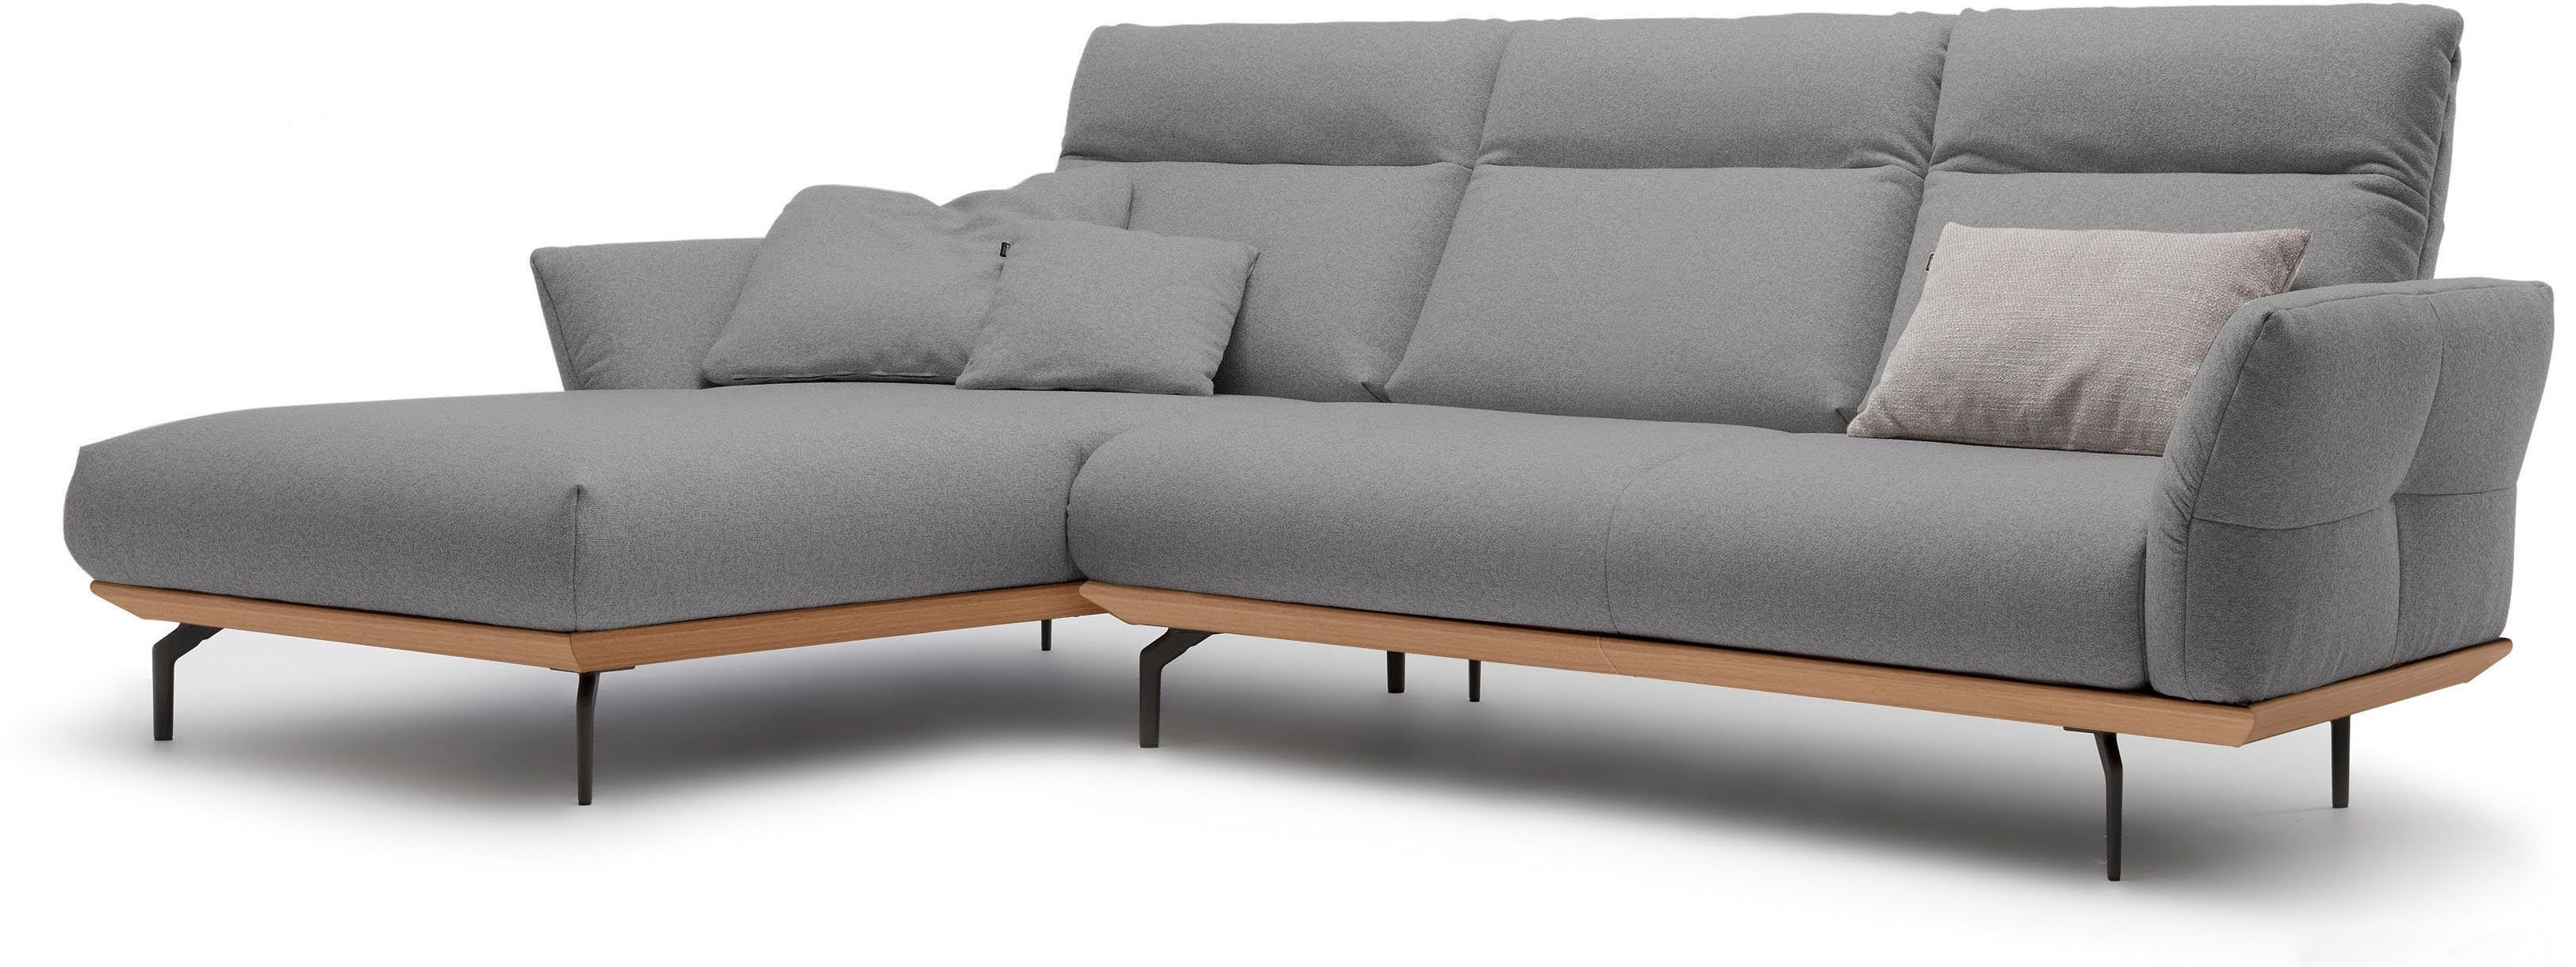 sofa hülsta in Breite Alugussfüße hs.460, cm Sockel umbragrau, 298 Eiche, in Ecksofa